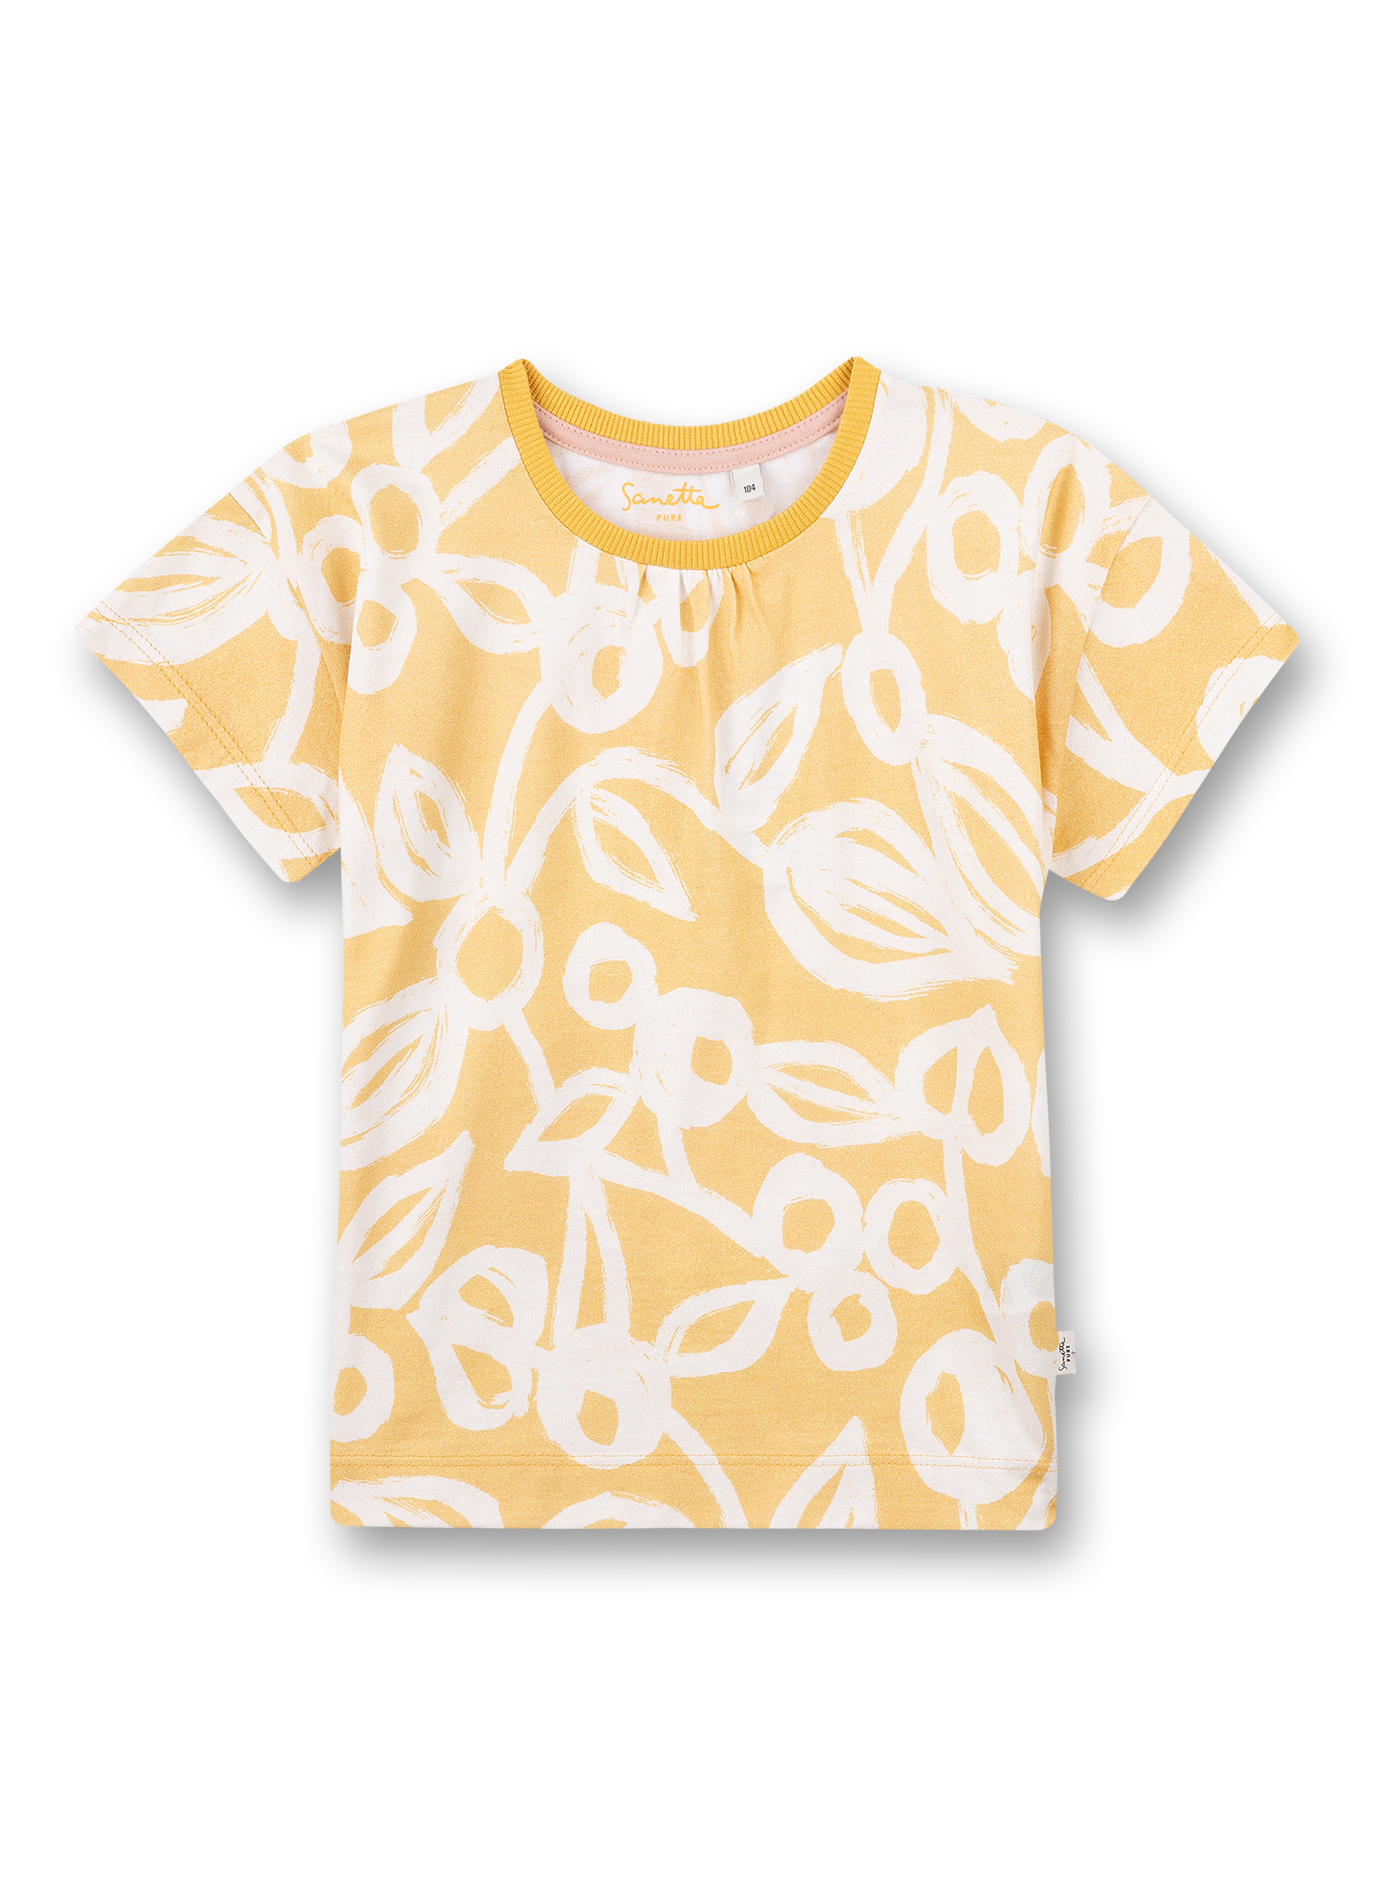 Mädchen T-Shirt Gelb